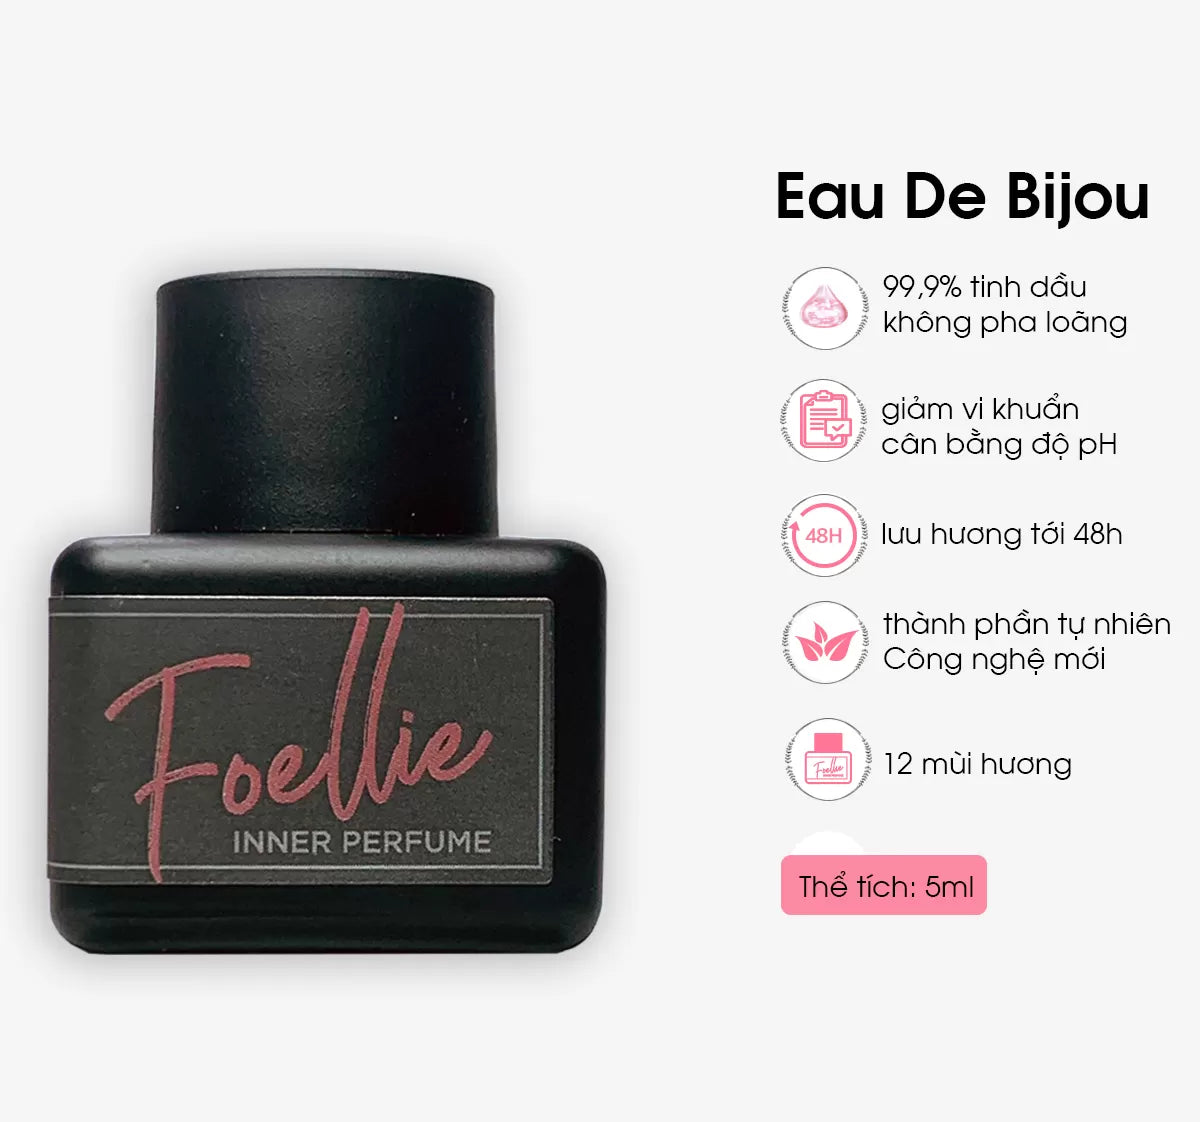 Nước Hoa Vùng Kín Foellie Eau de bijou Perfume 5ml